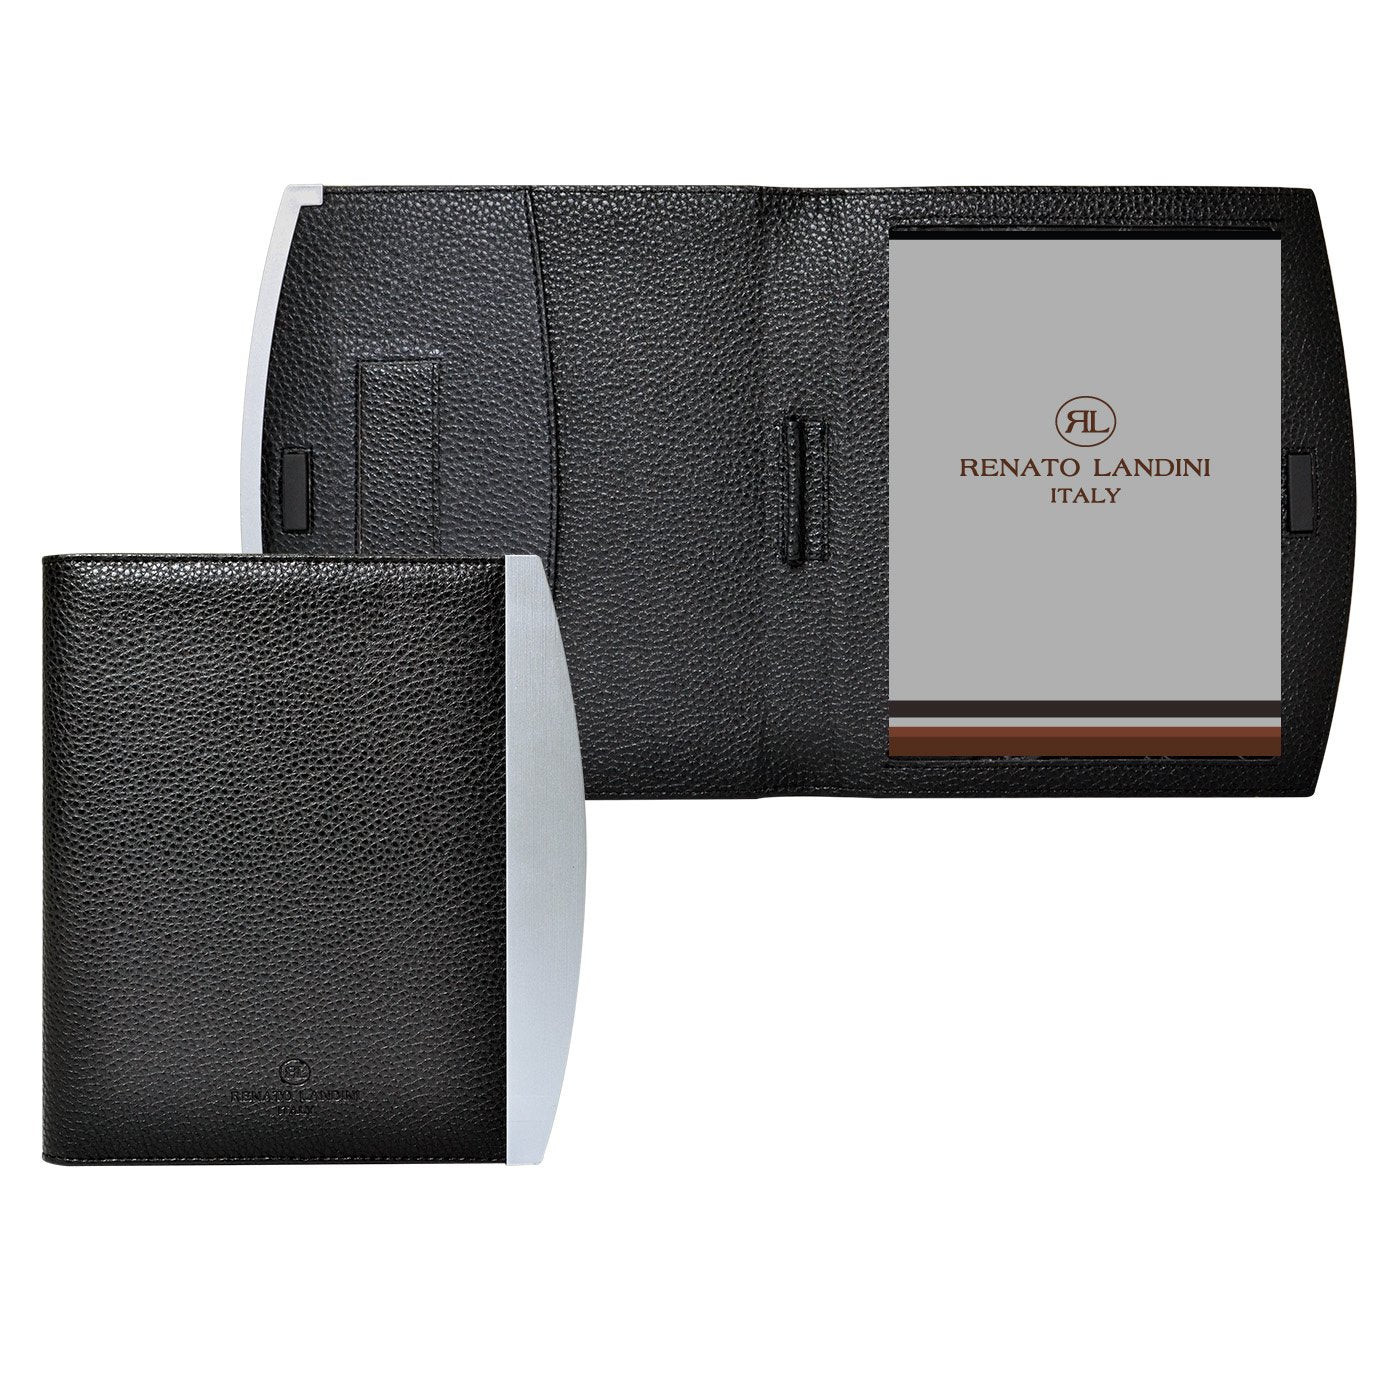 RENATO LANDINI Gift Set: Black Leather A5 Folder + Pen